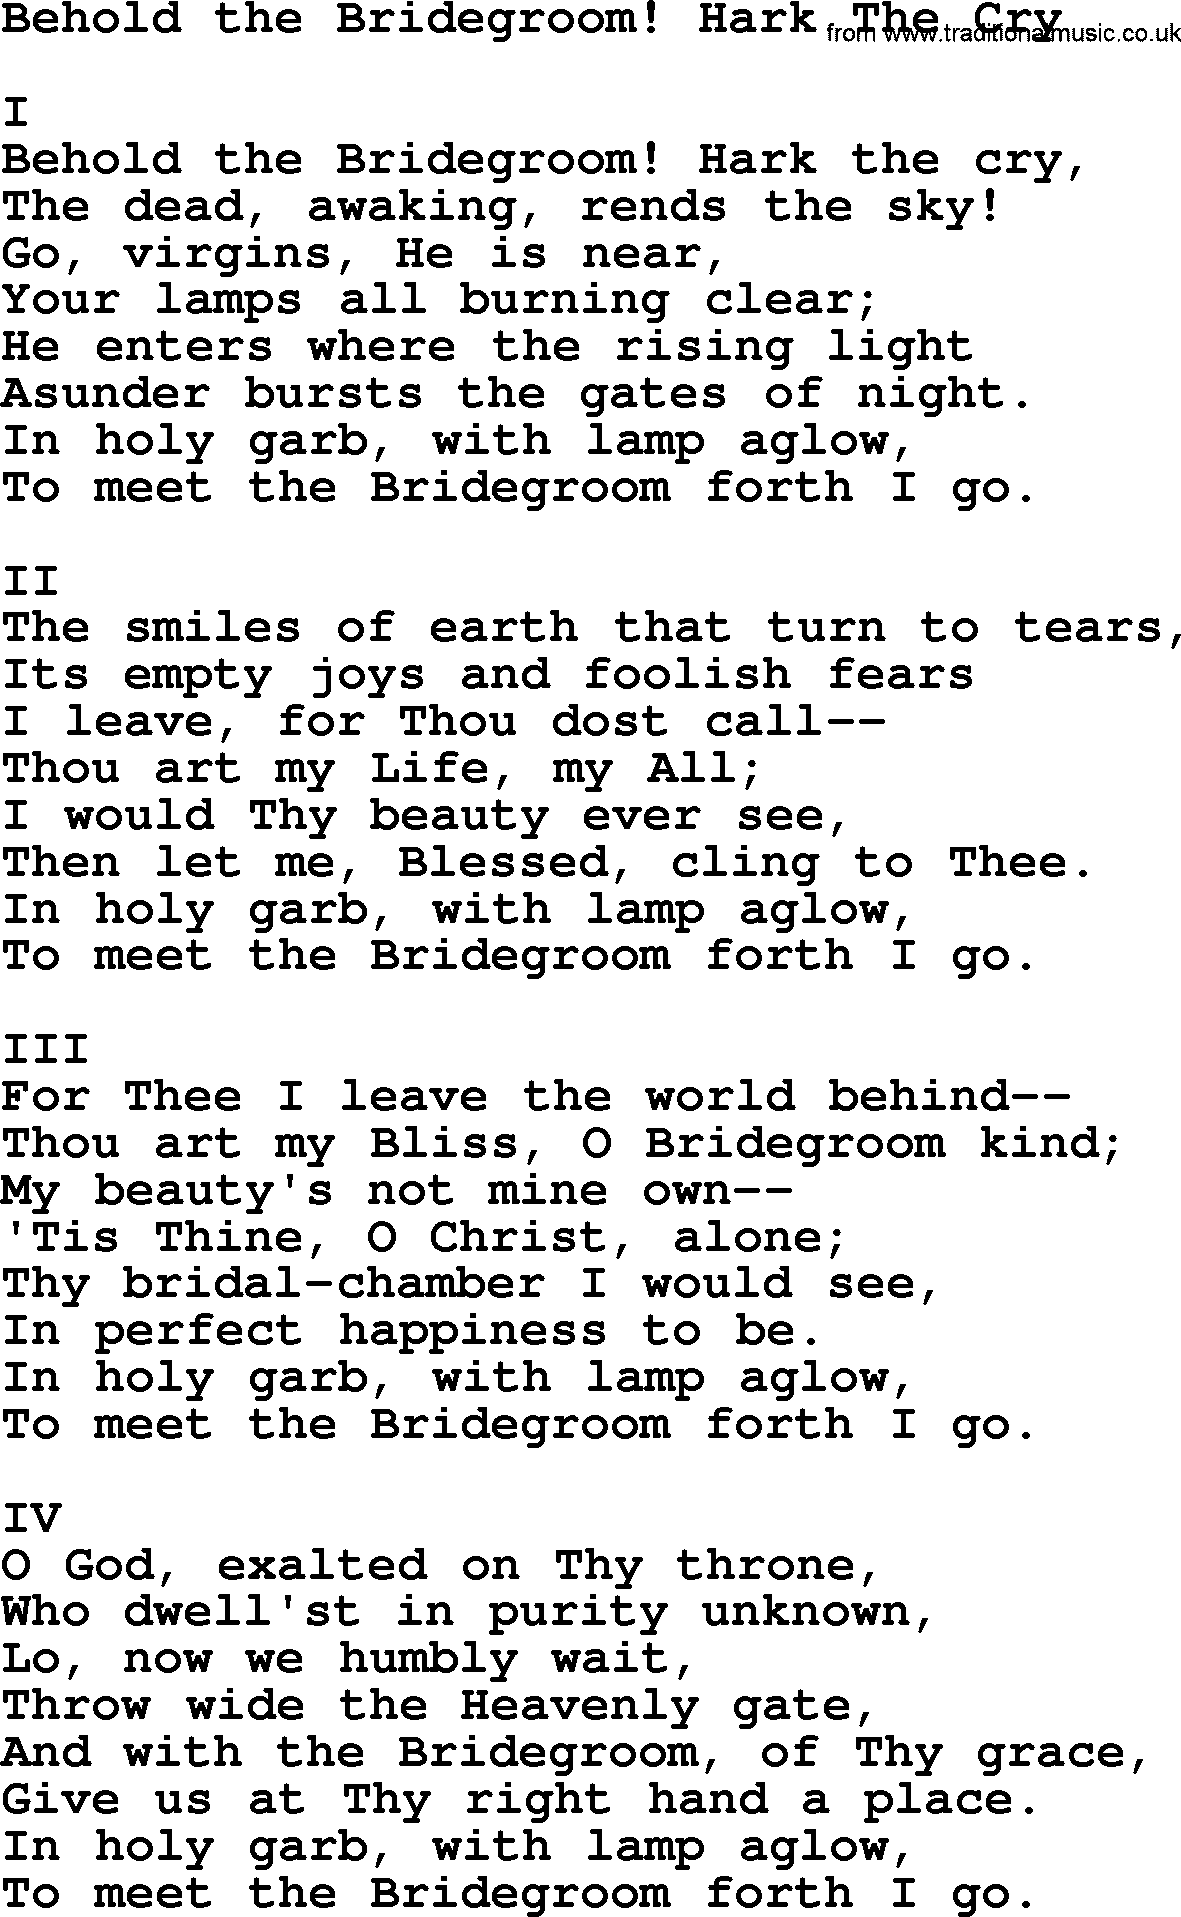 Advent Hymns, Hymn: Behold The Bridegroom! Hark The Cry, lyrics with PDF